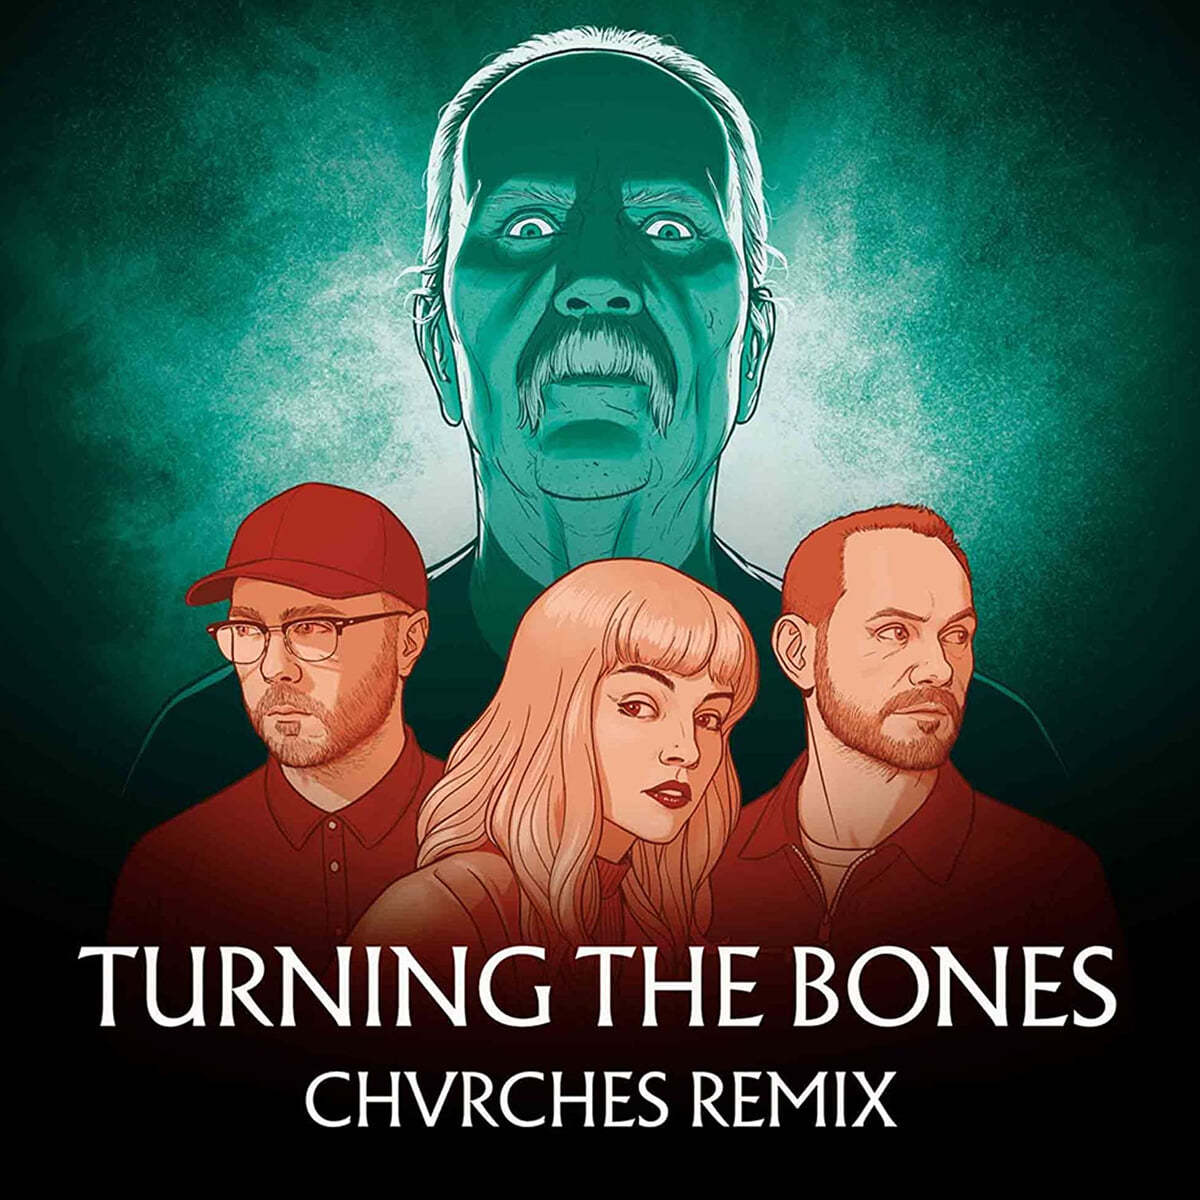 John Carpenter / Chvrches (존 카펜터 / 처치스) - Turning The Bones (Chvrches Remix) [블루 &amp; 핑크 마블 컬러 7인치 Vinyl] 